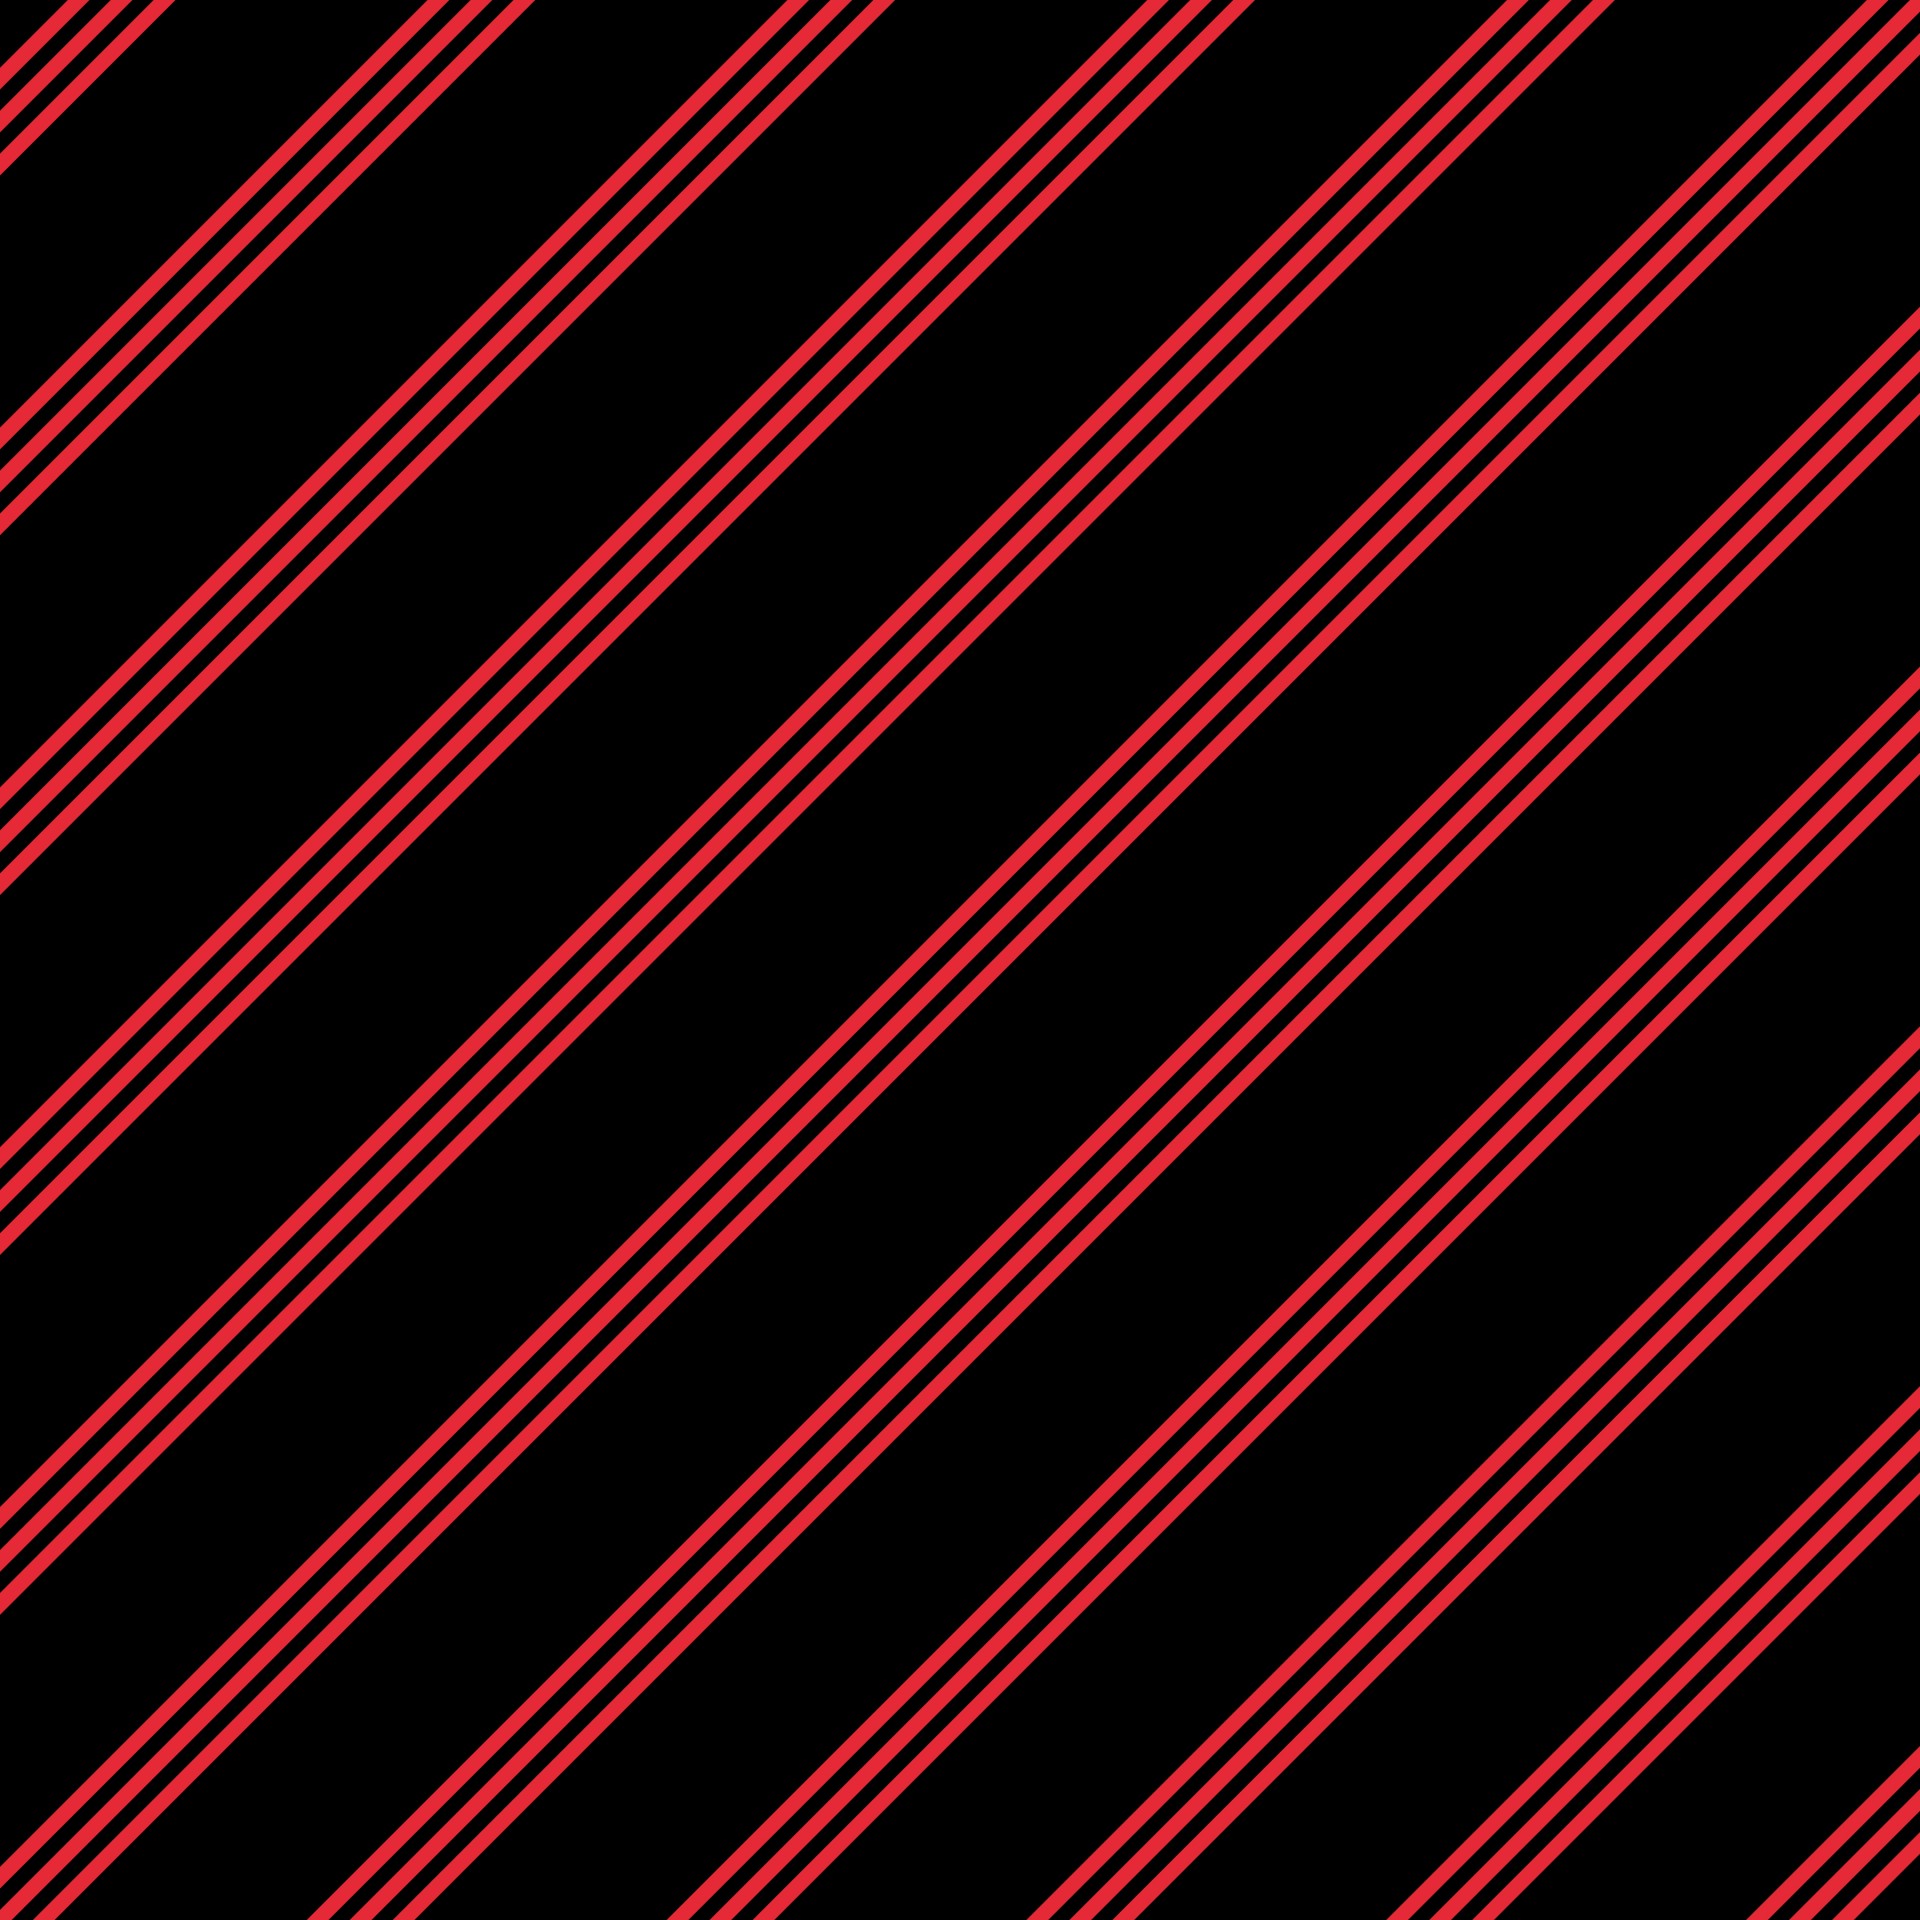 Alizarin Crimson Stripes model